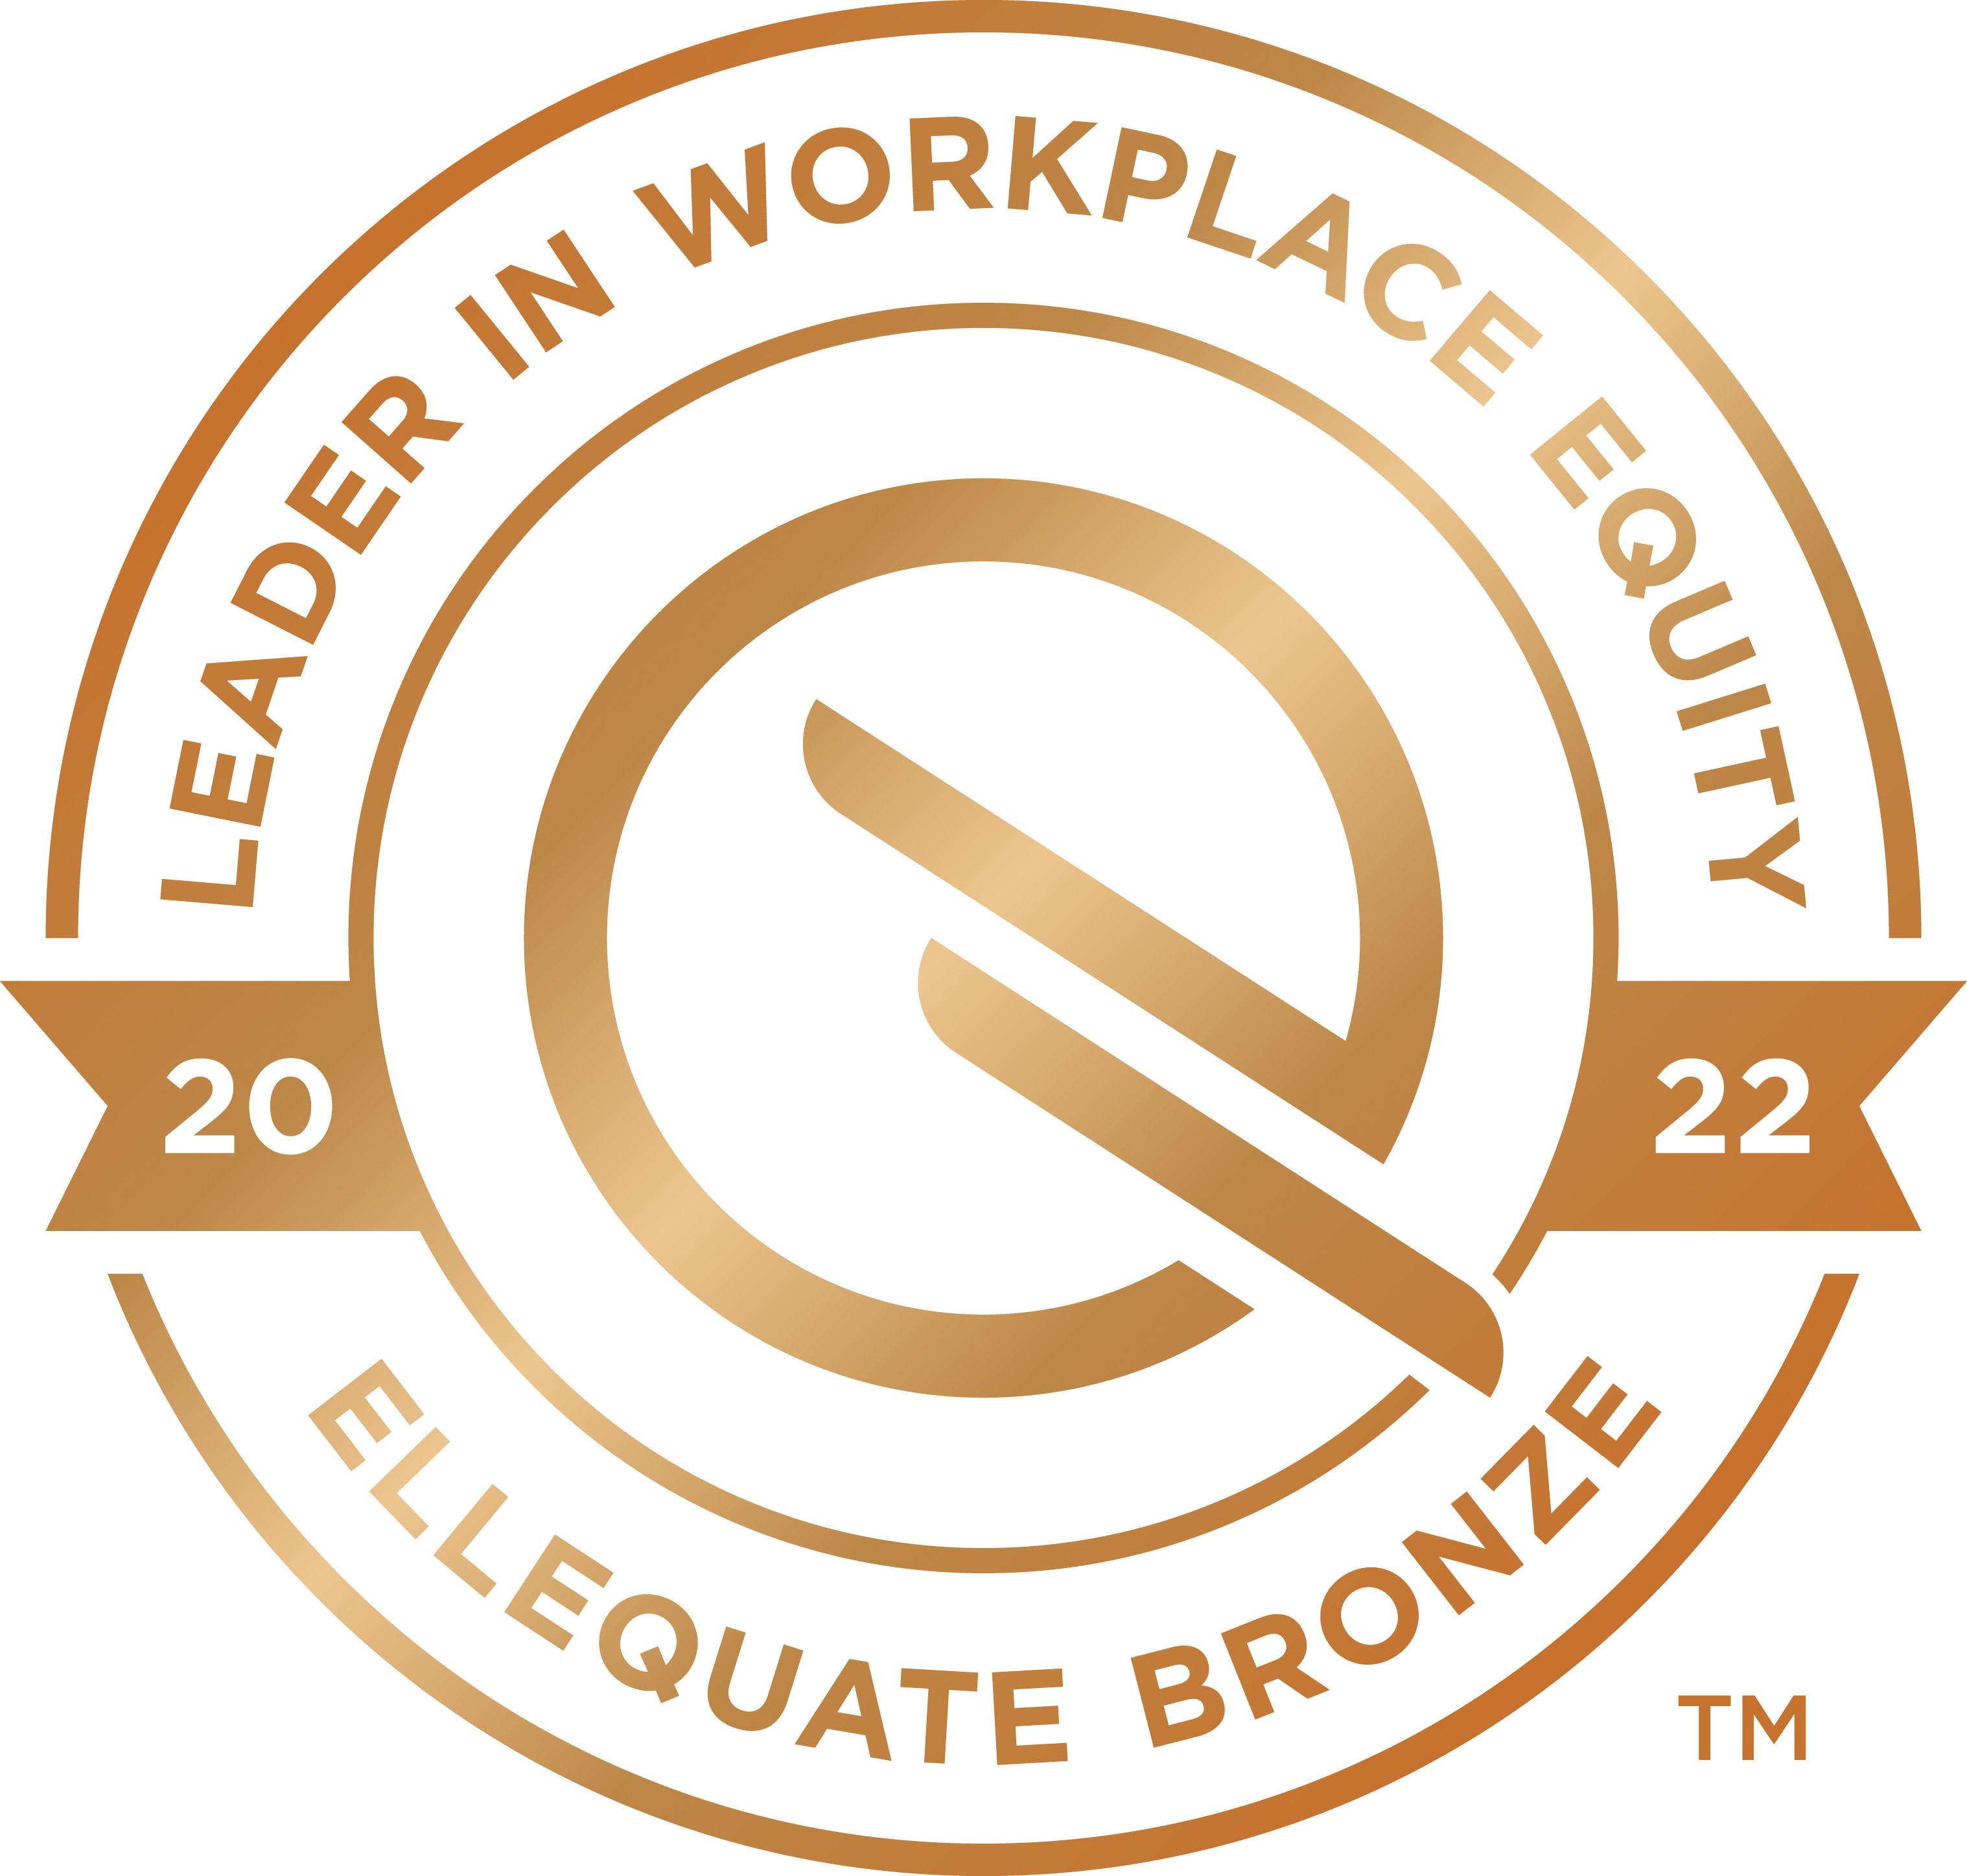 Ellequate Bronze Certification Seal 2022